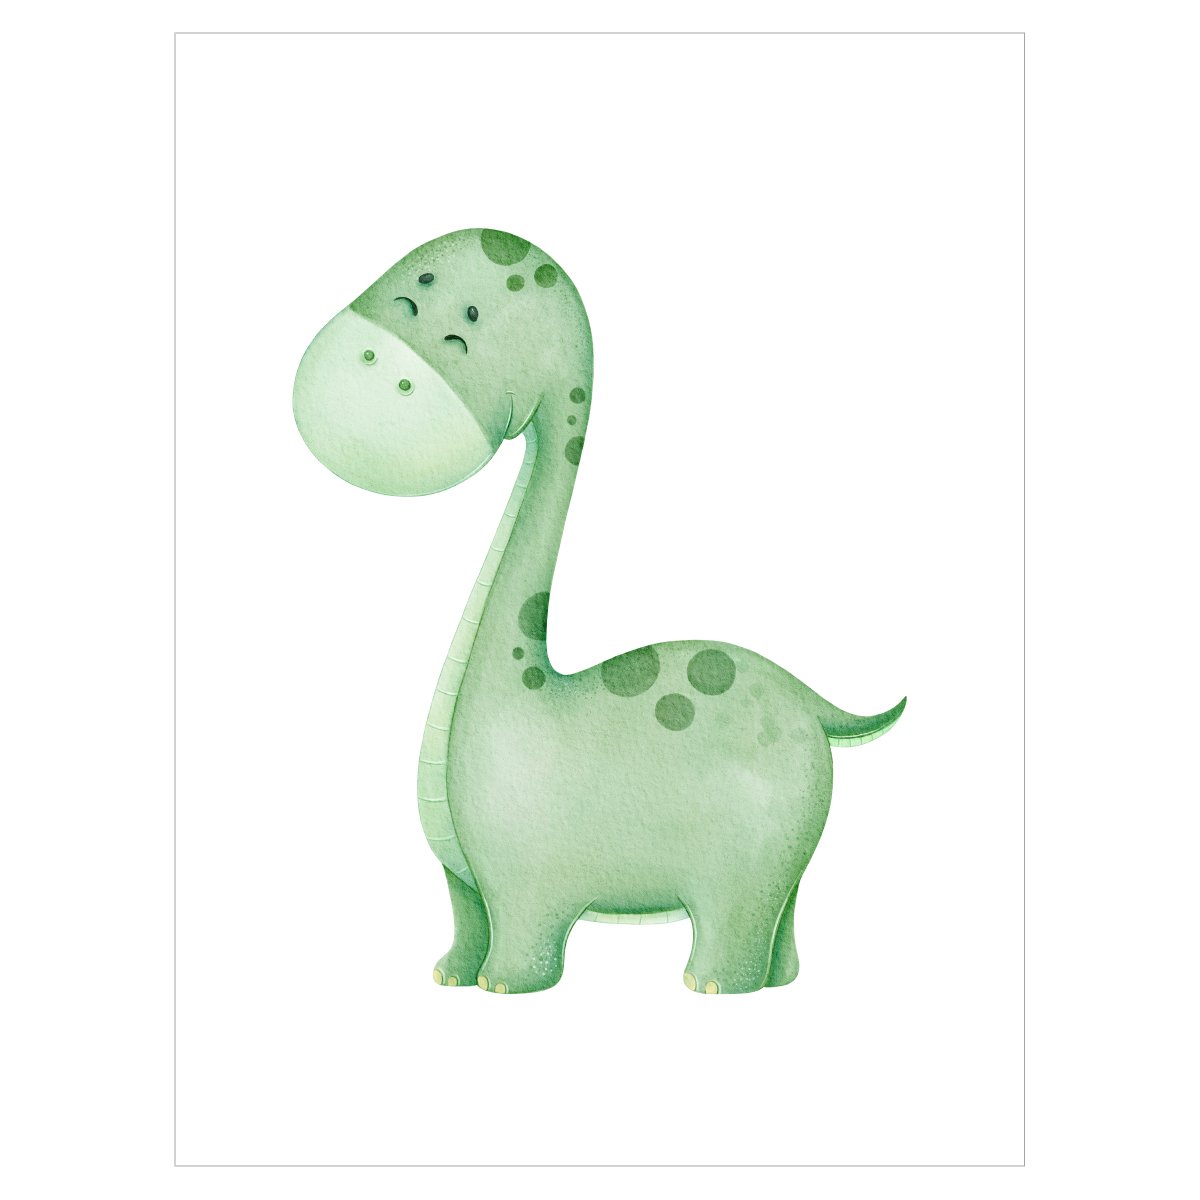 Plakat do pokoju dziecka - zielony dinozaur